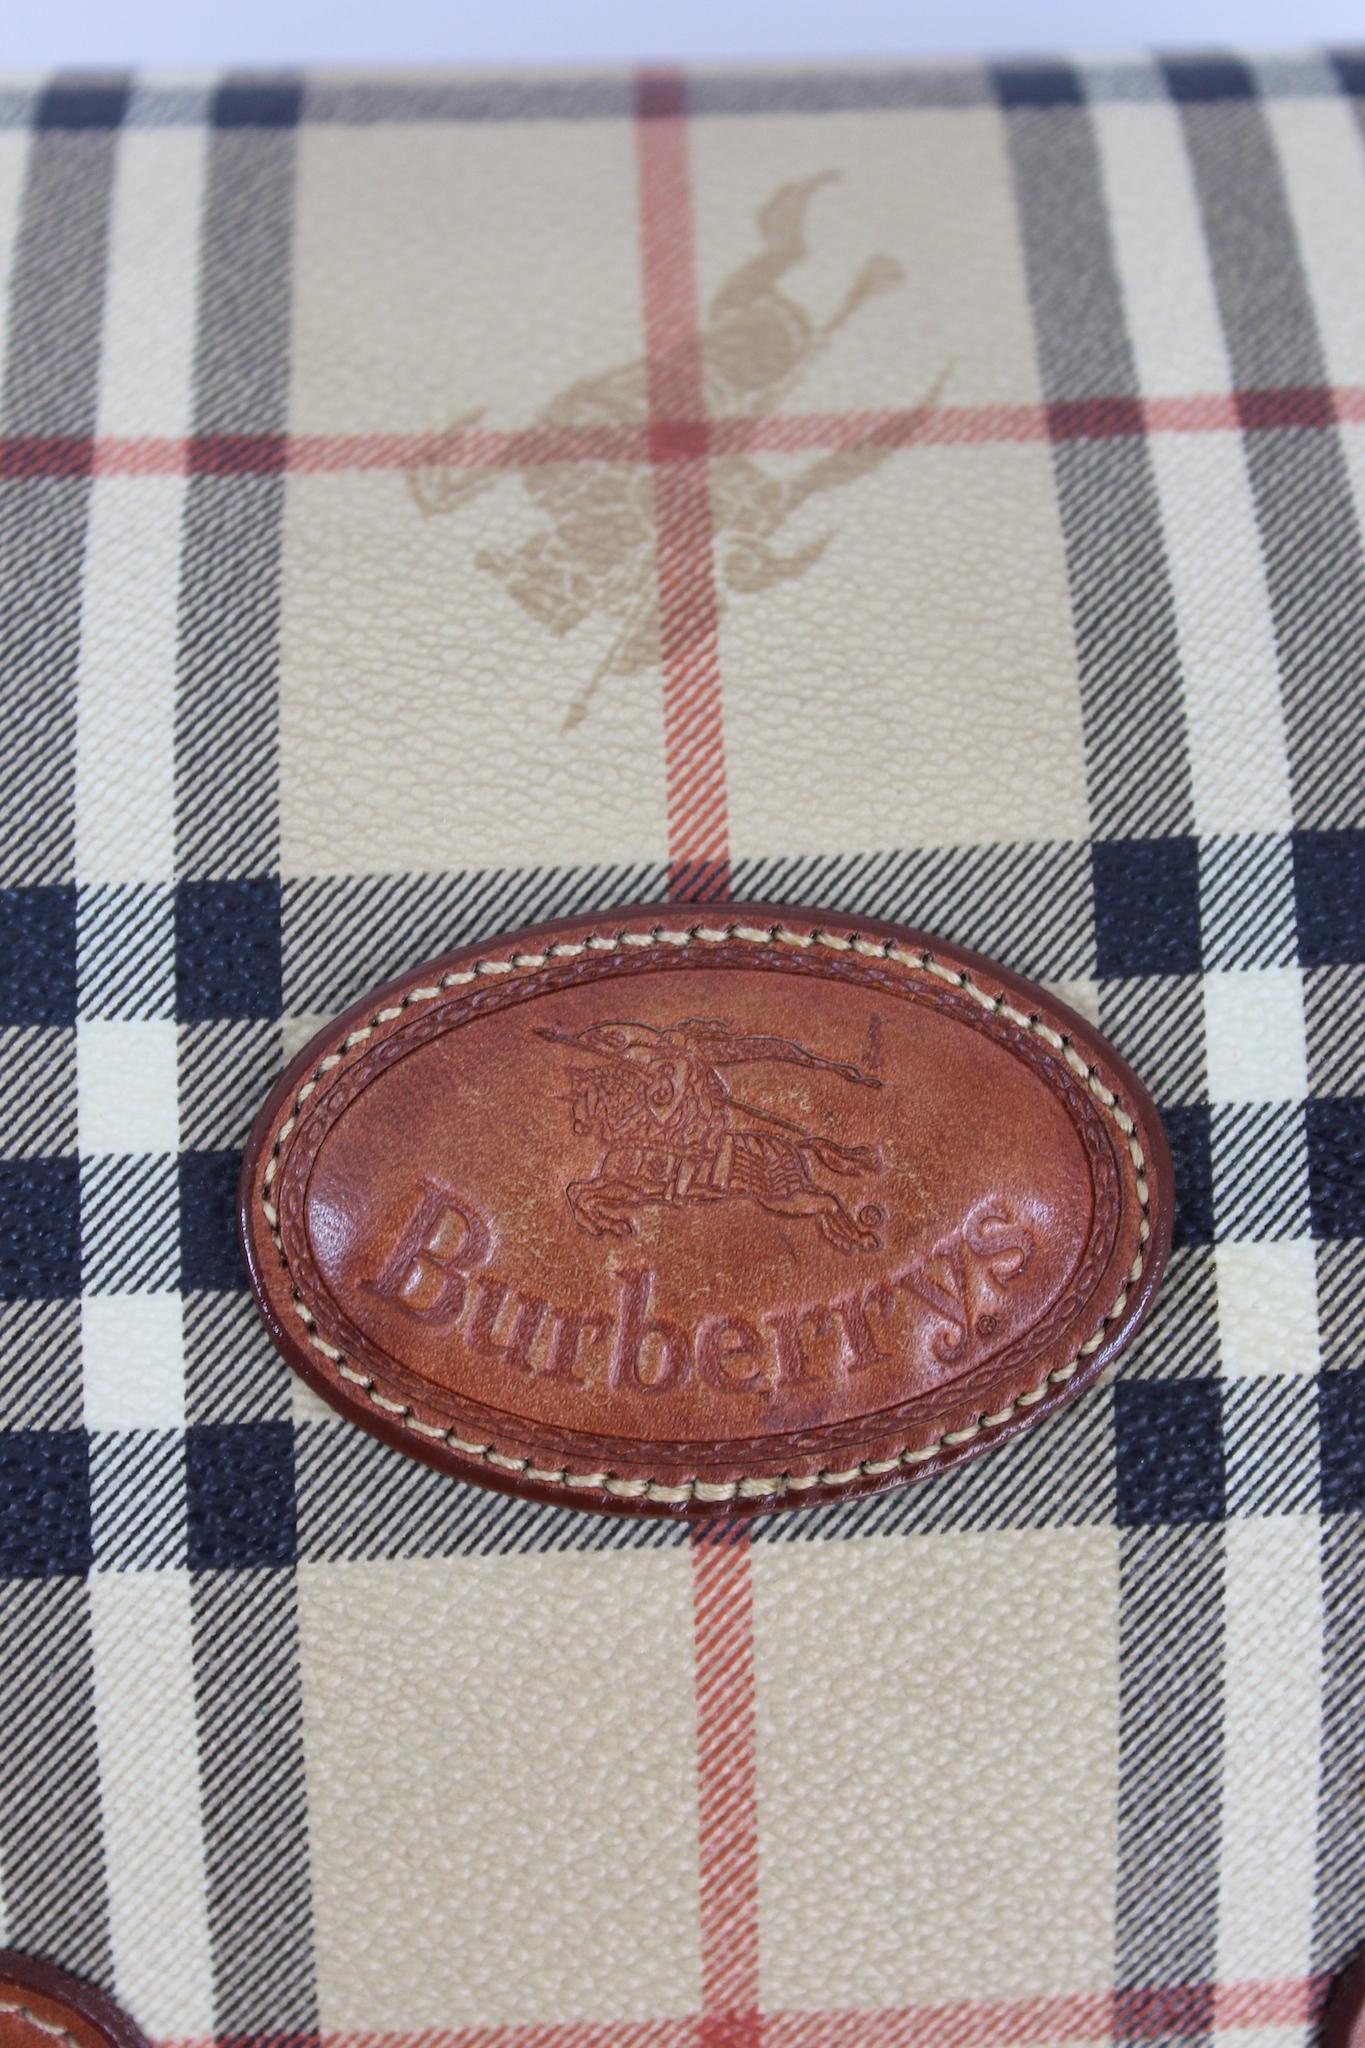 Burberry Beige Leather Canvas Check Vintage Trunk Bag 8